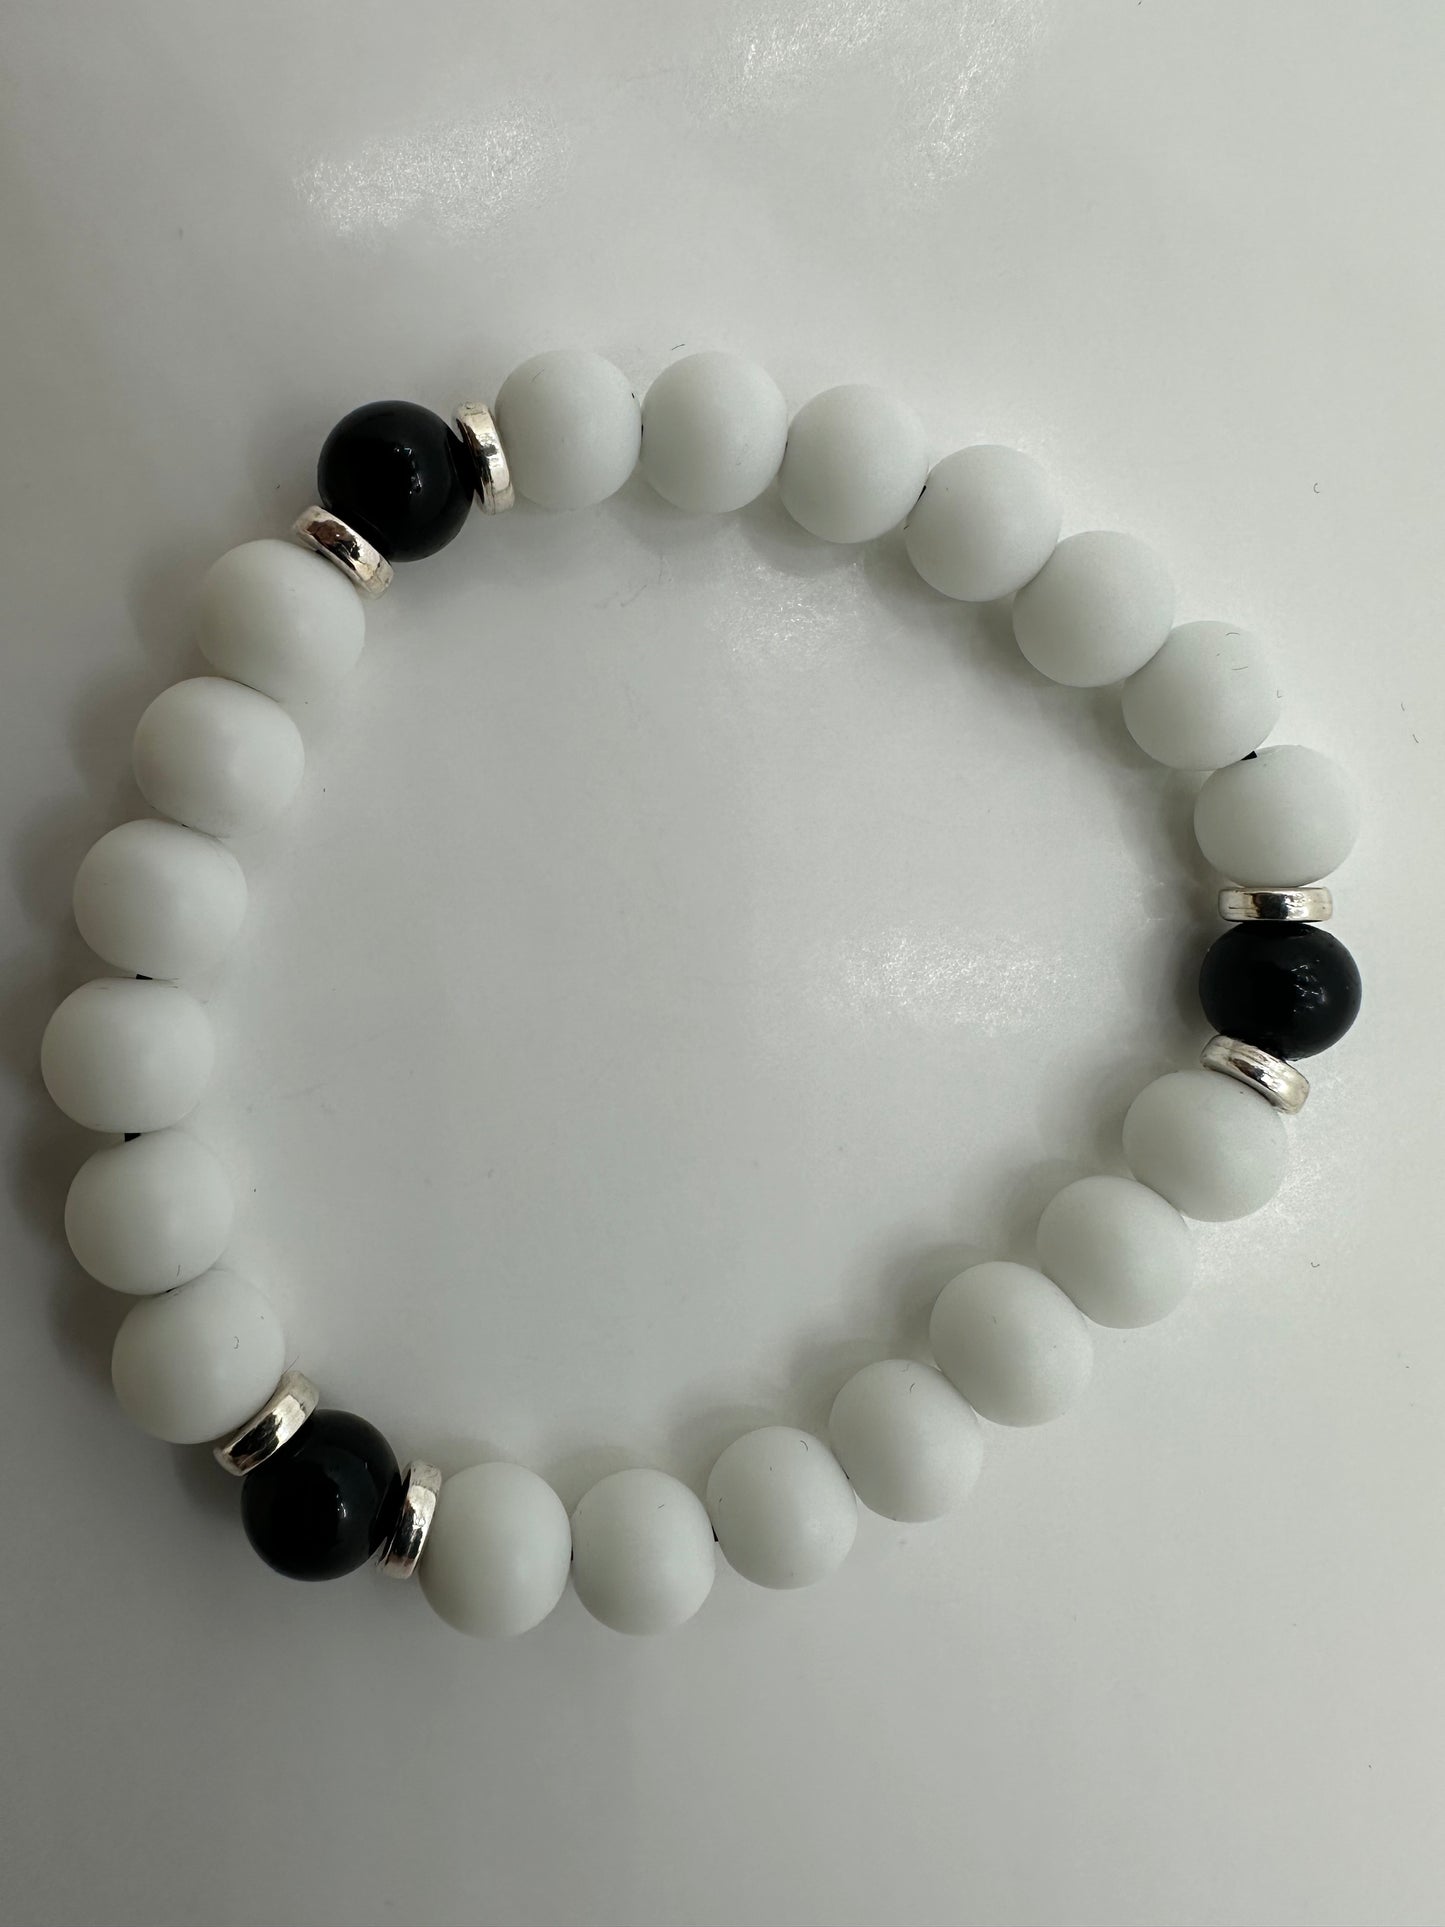 White Agate and Black Onyx Gemstone Bracelet Size 7.25 in.